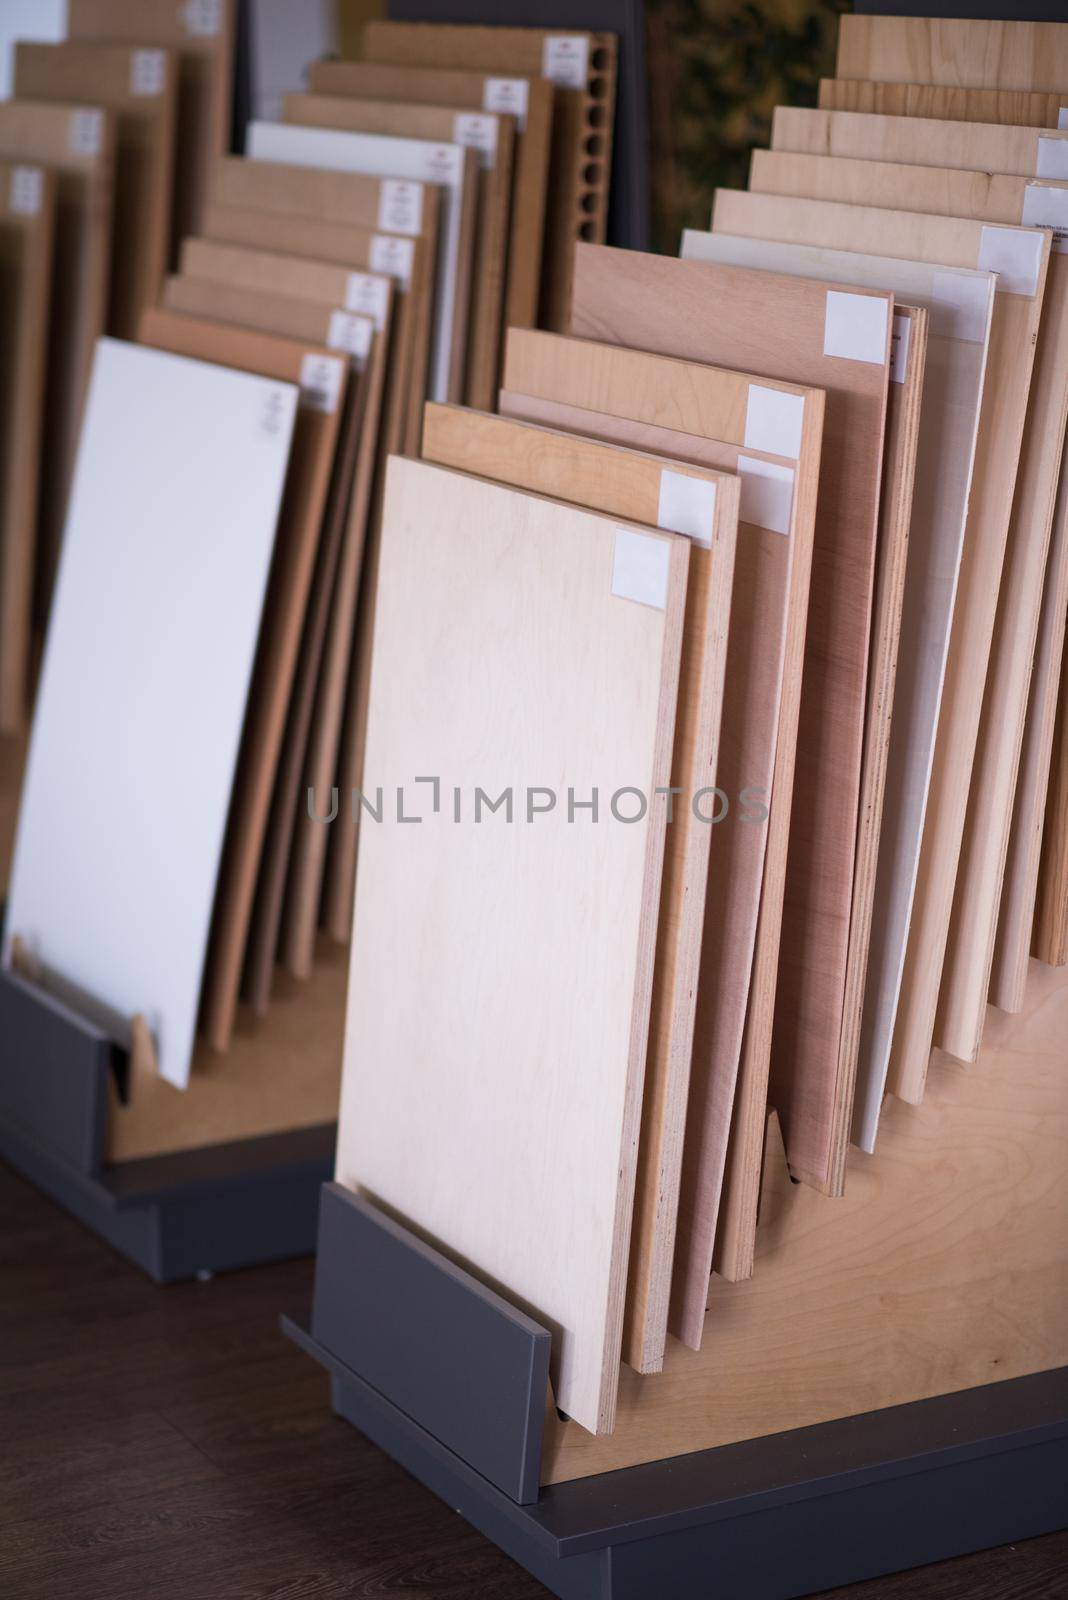 samples of wooden furniture by dotshock